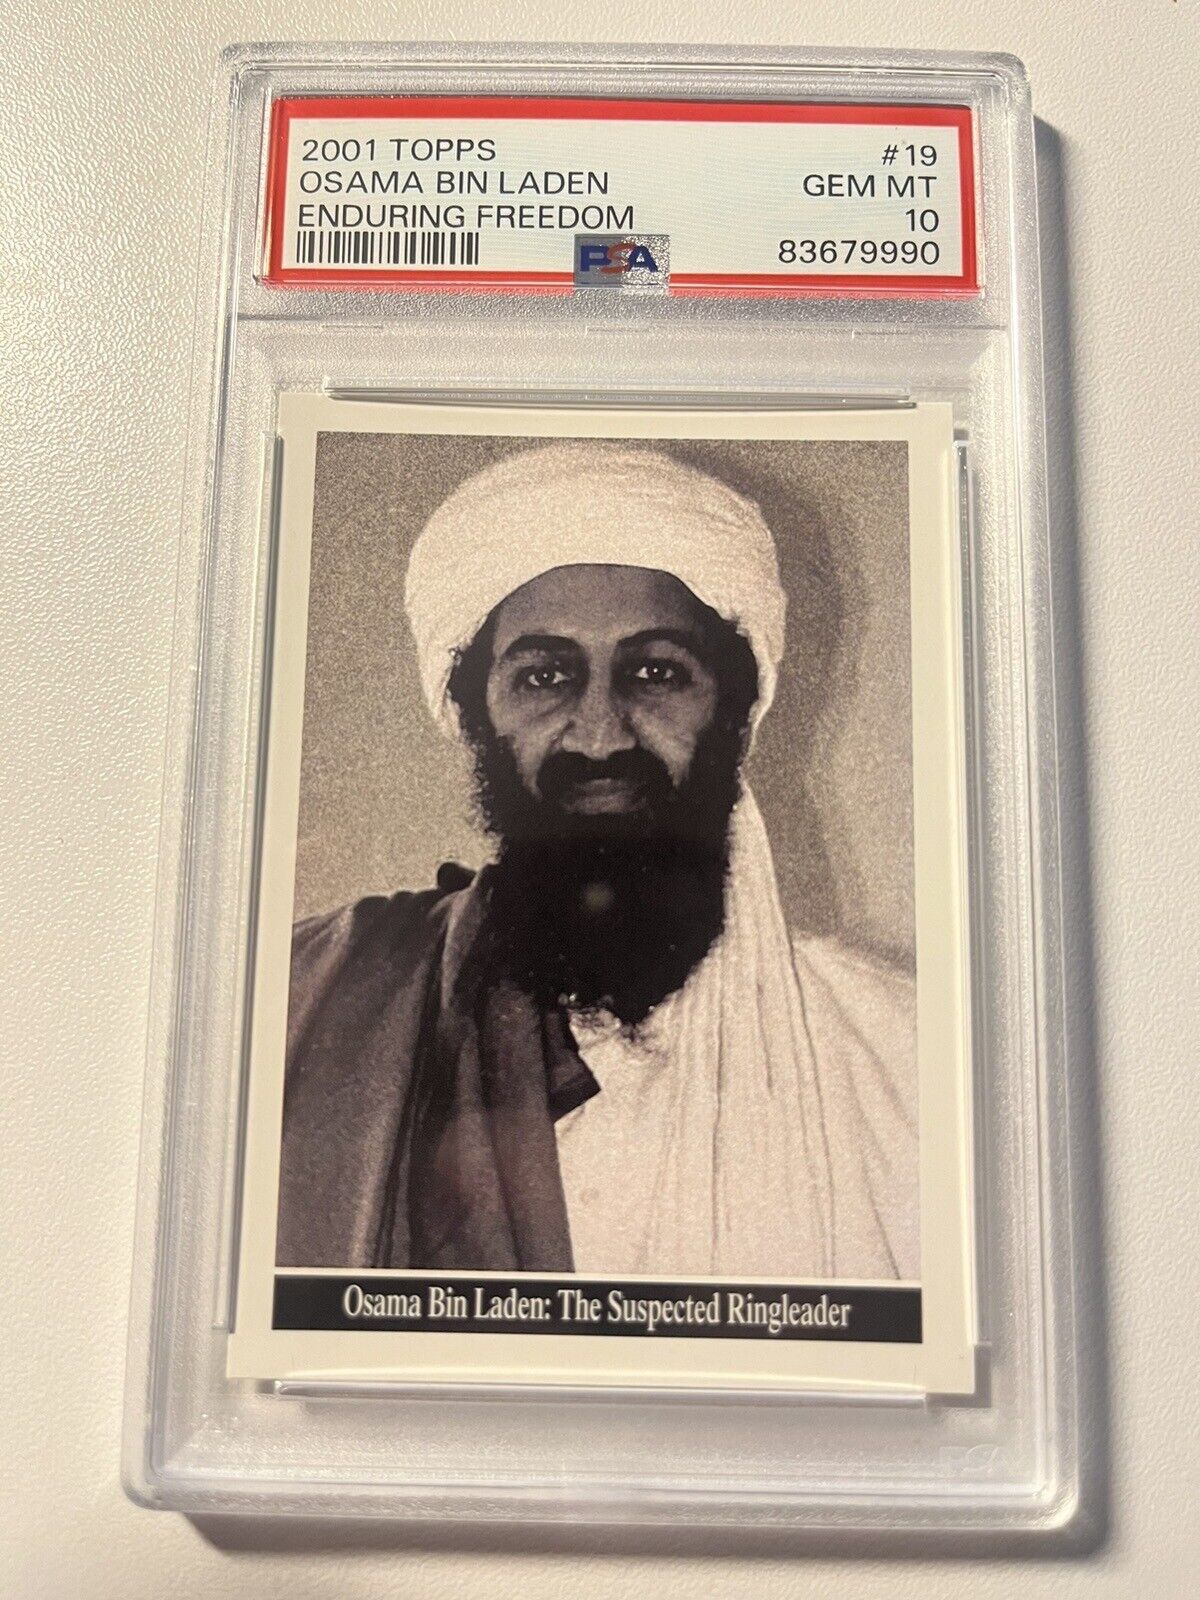 2001 Topps Enduring Freedom Osama Bin Laden RC Card PSA 10 Gem Mint #19